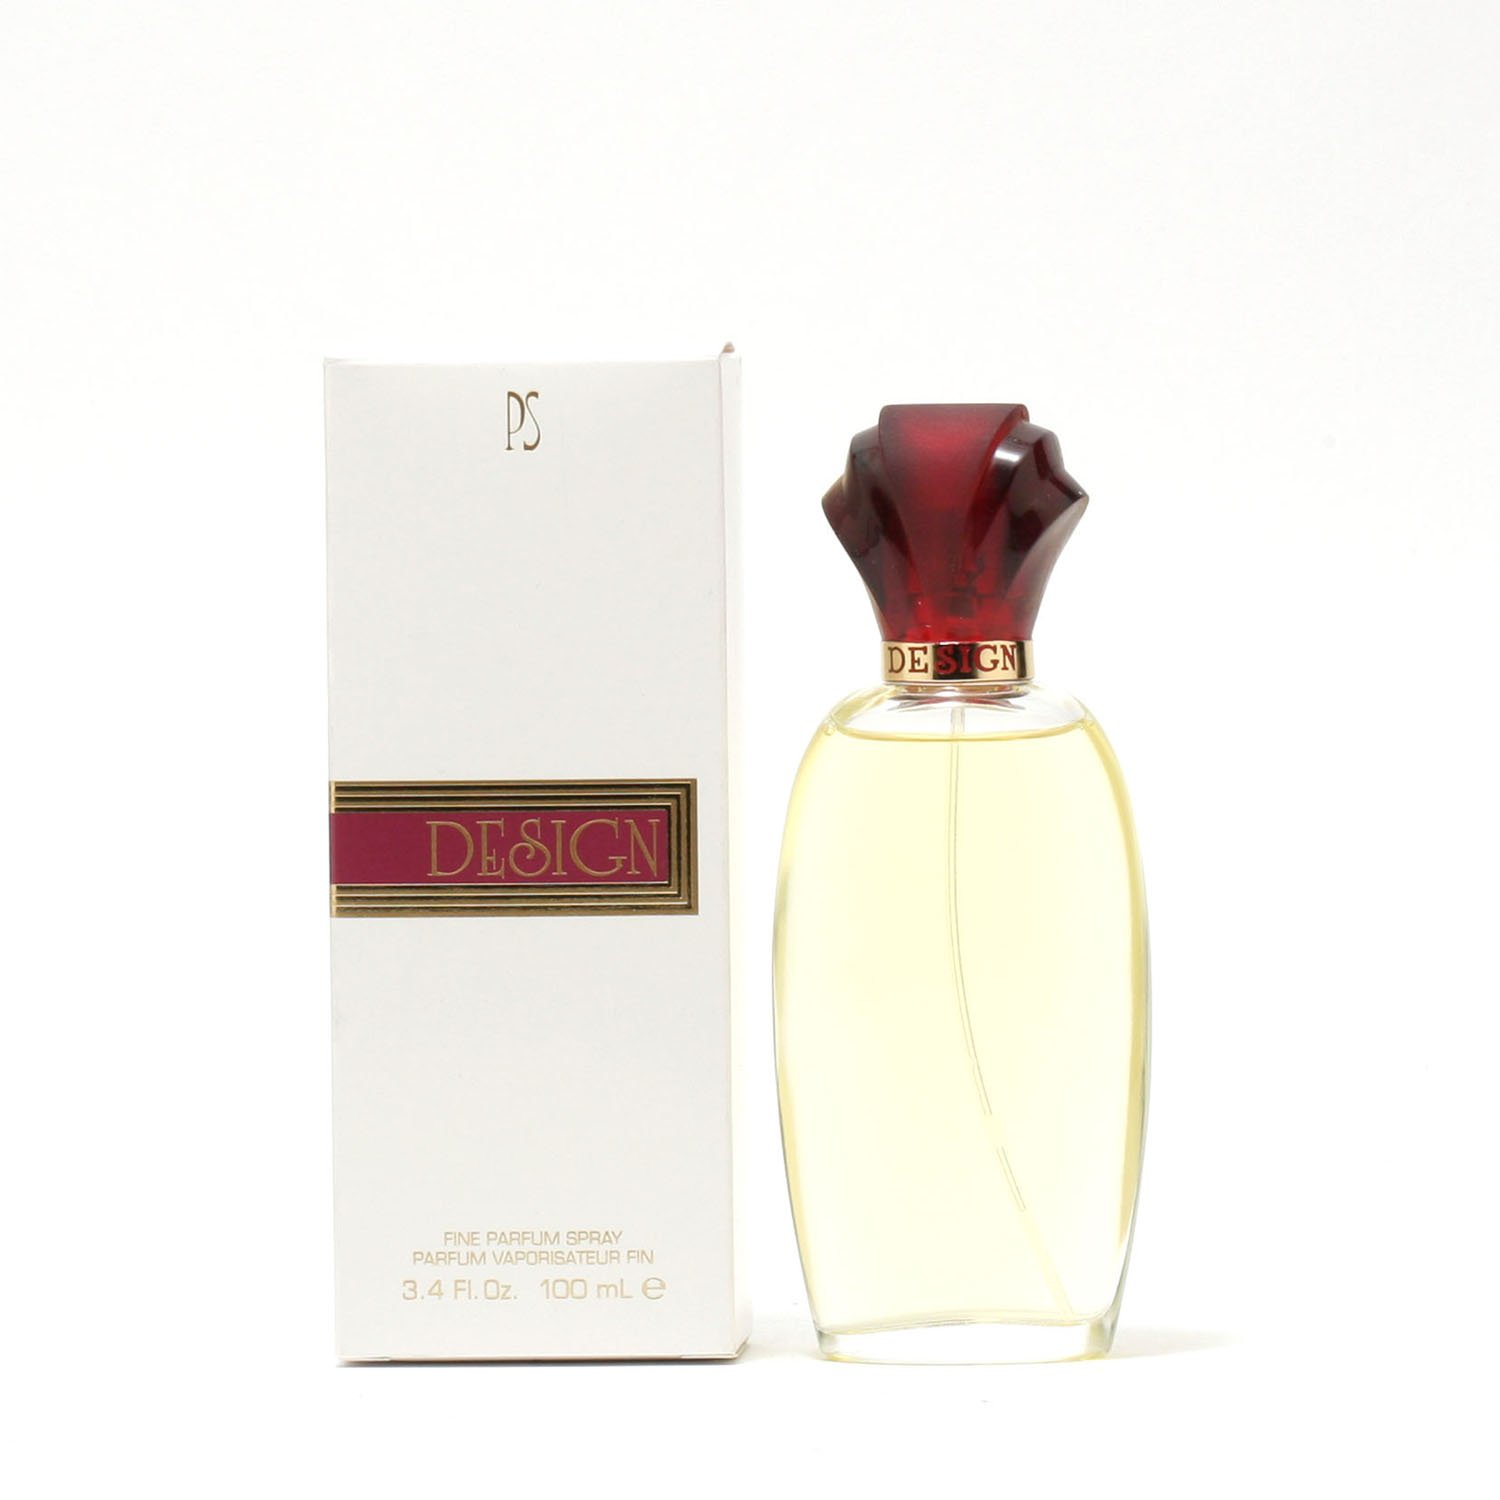 Perfume - DESIGN FOR WOMEN BY PAUL SEBASTIAN - FINE PERFUME SPRAY, 3.4 OZ